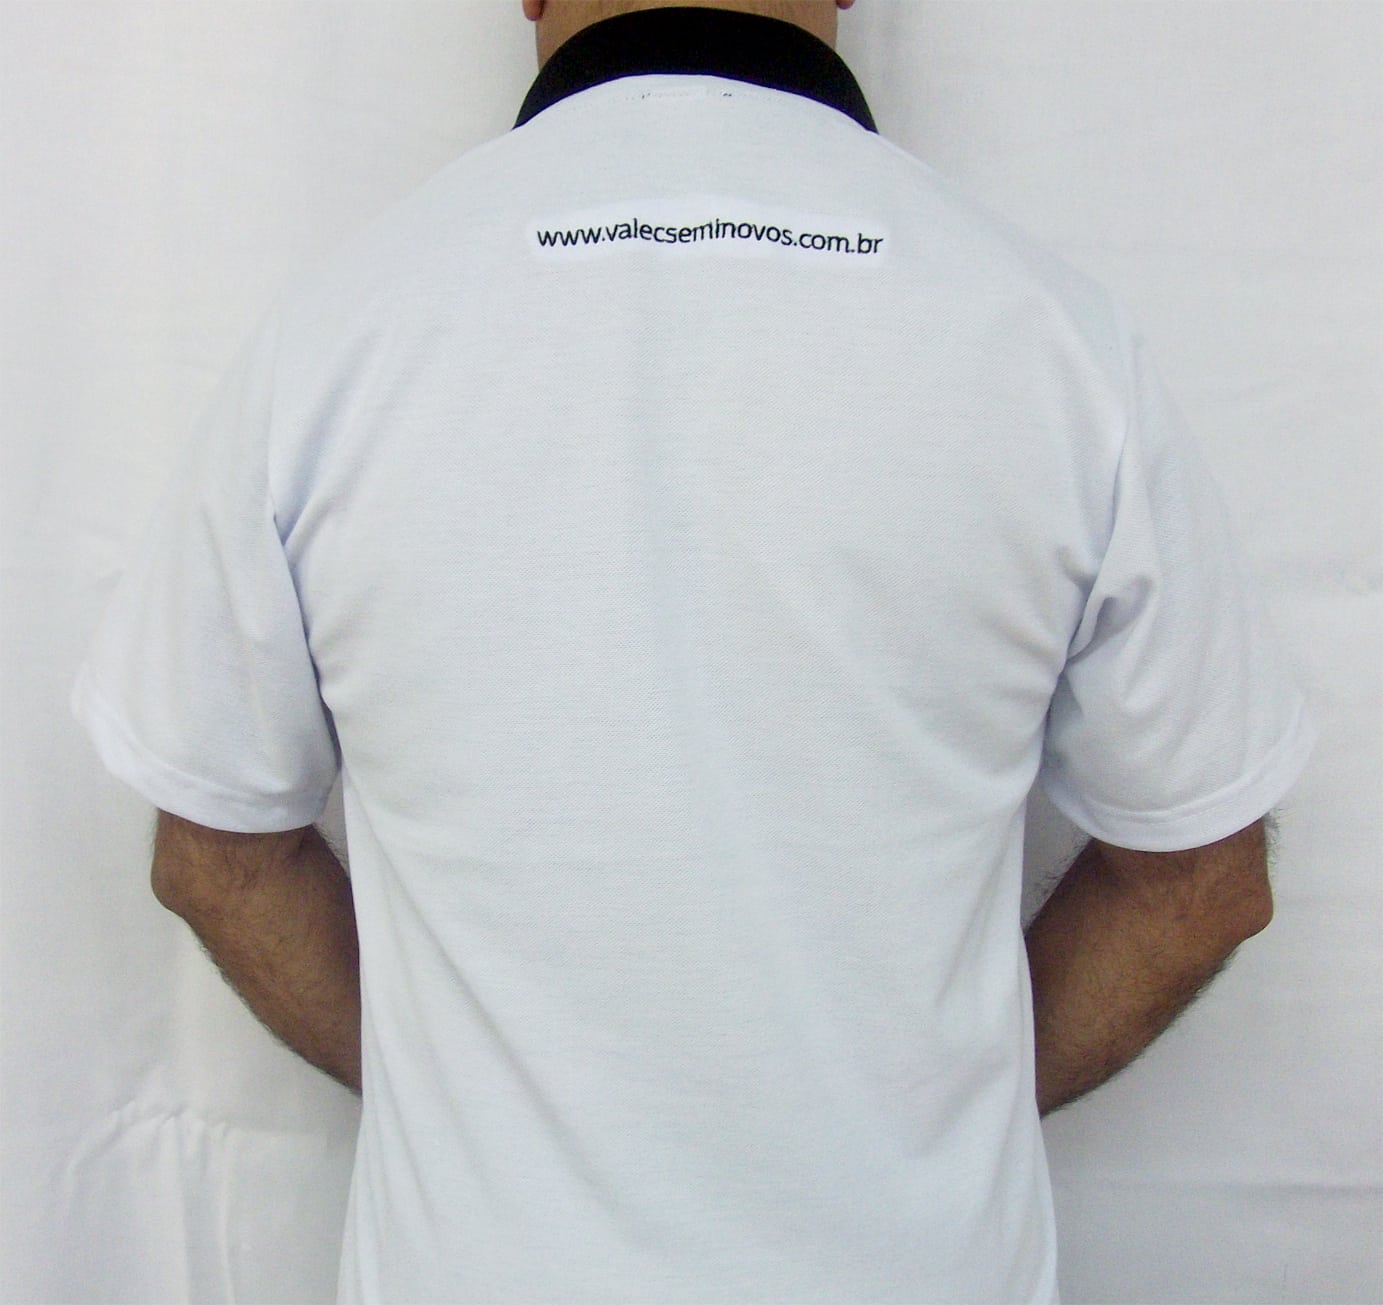 Camiseta do tipo polo com gola colorida e bordado no bolso